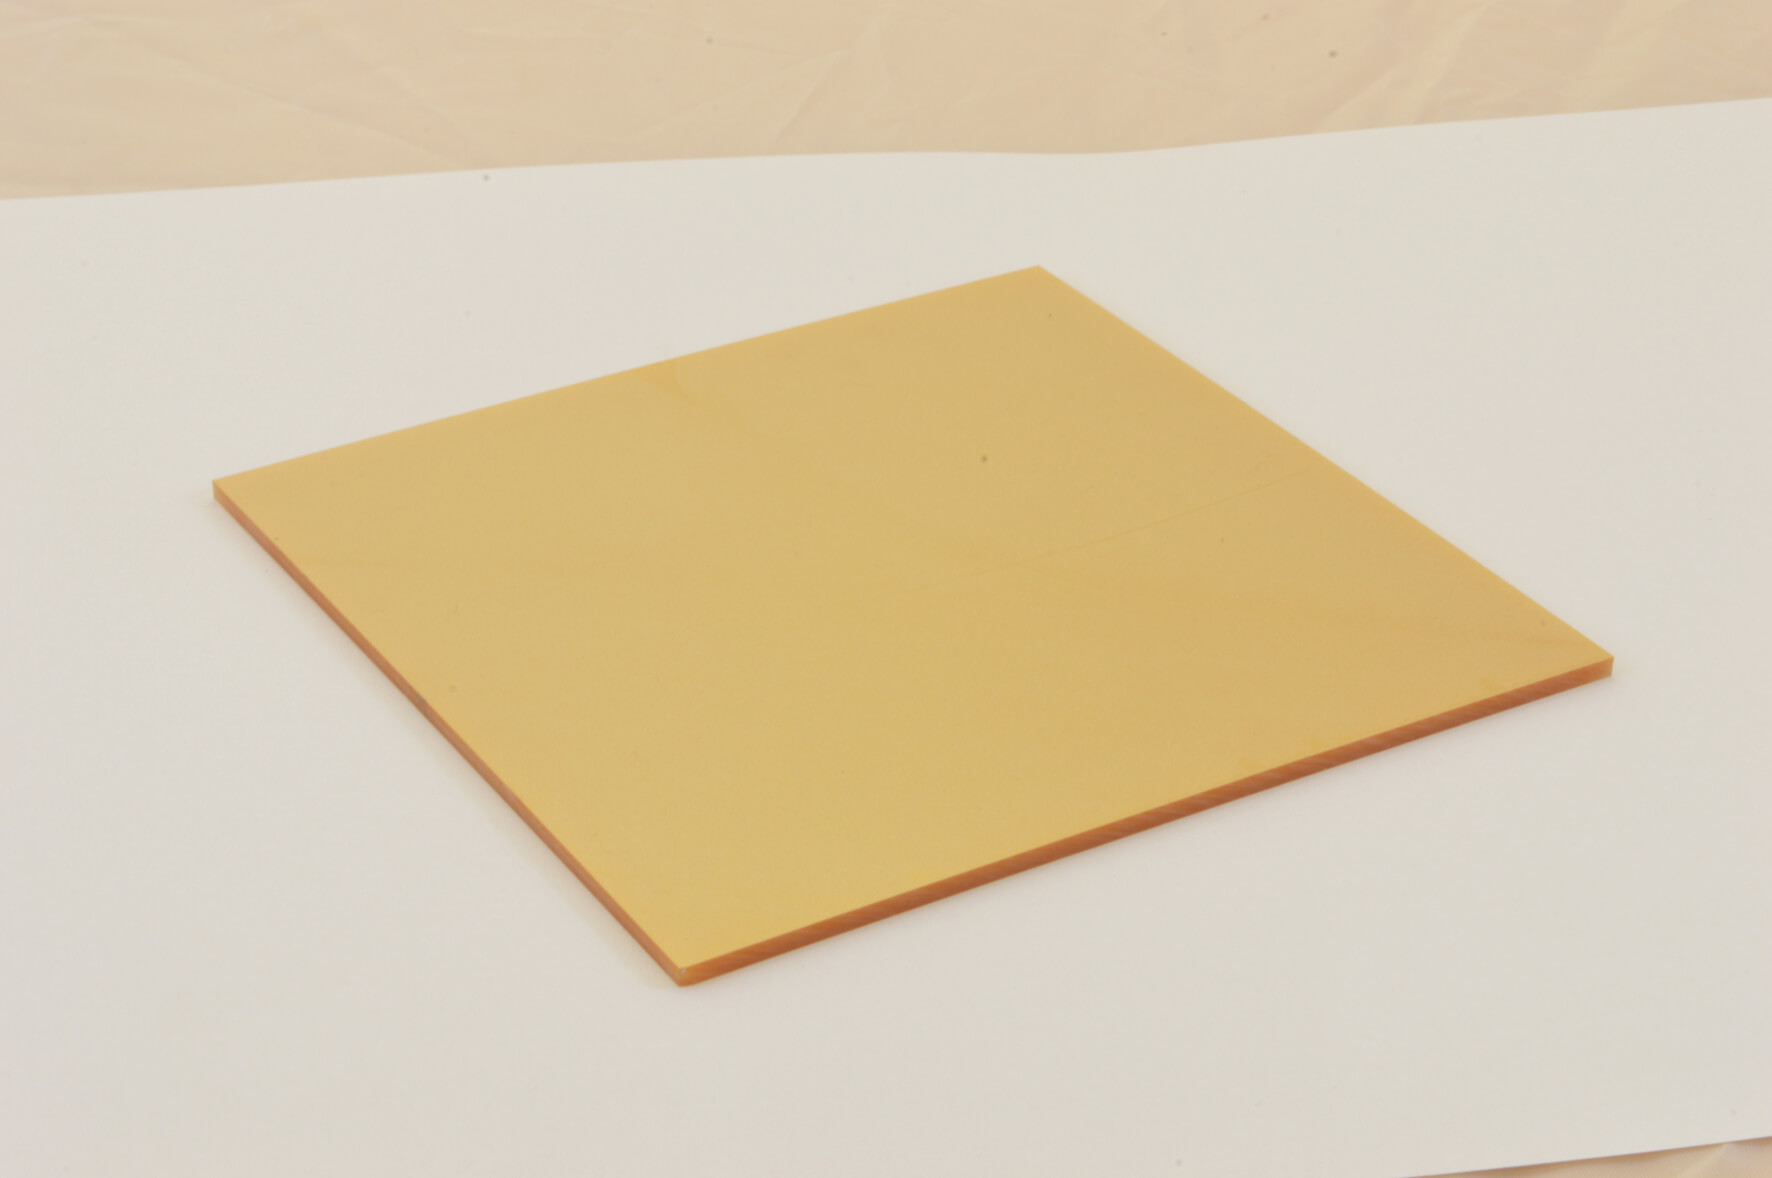 Pearlescent Cast Acrylic 3mm Sheet - Caramel Gold 600 x 400mm